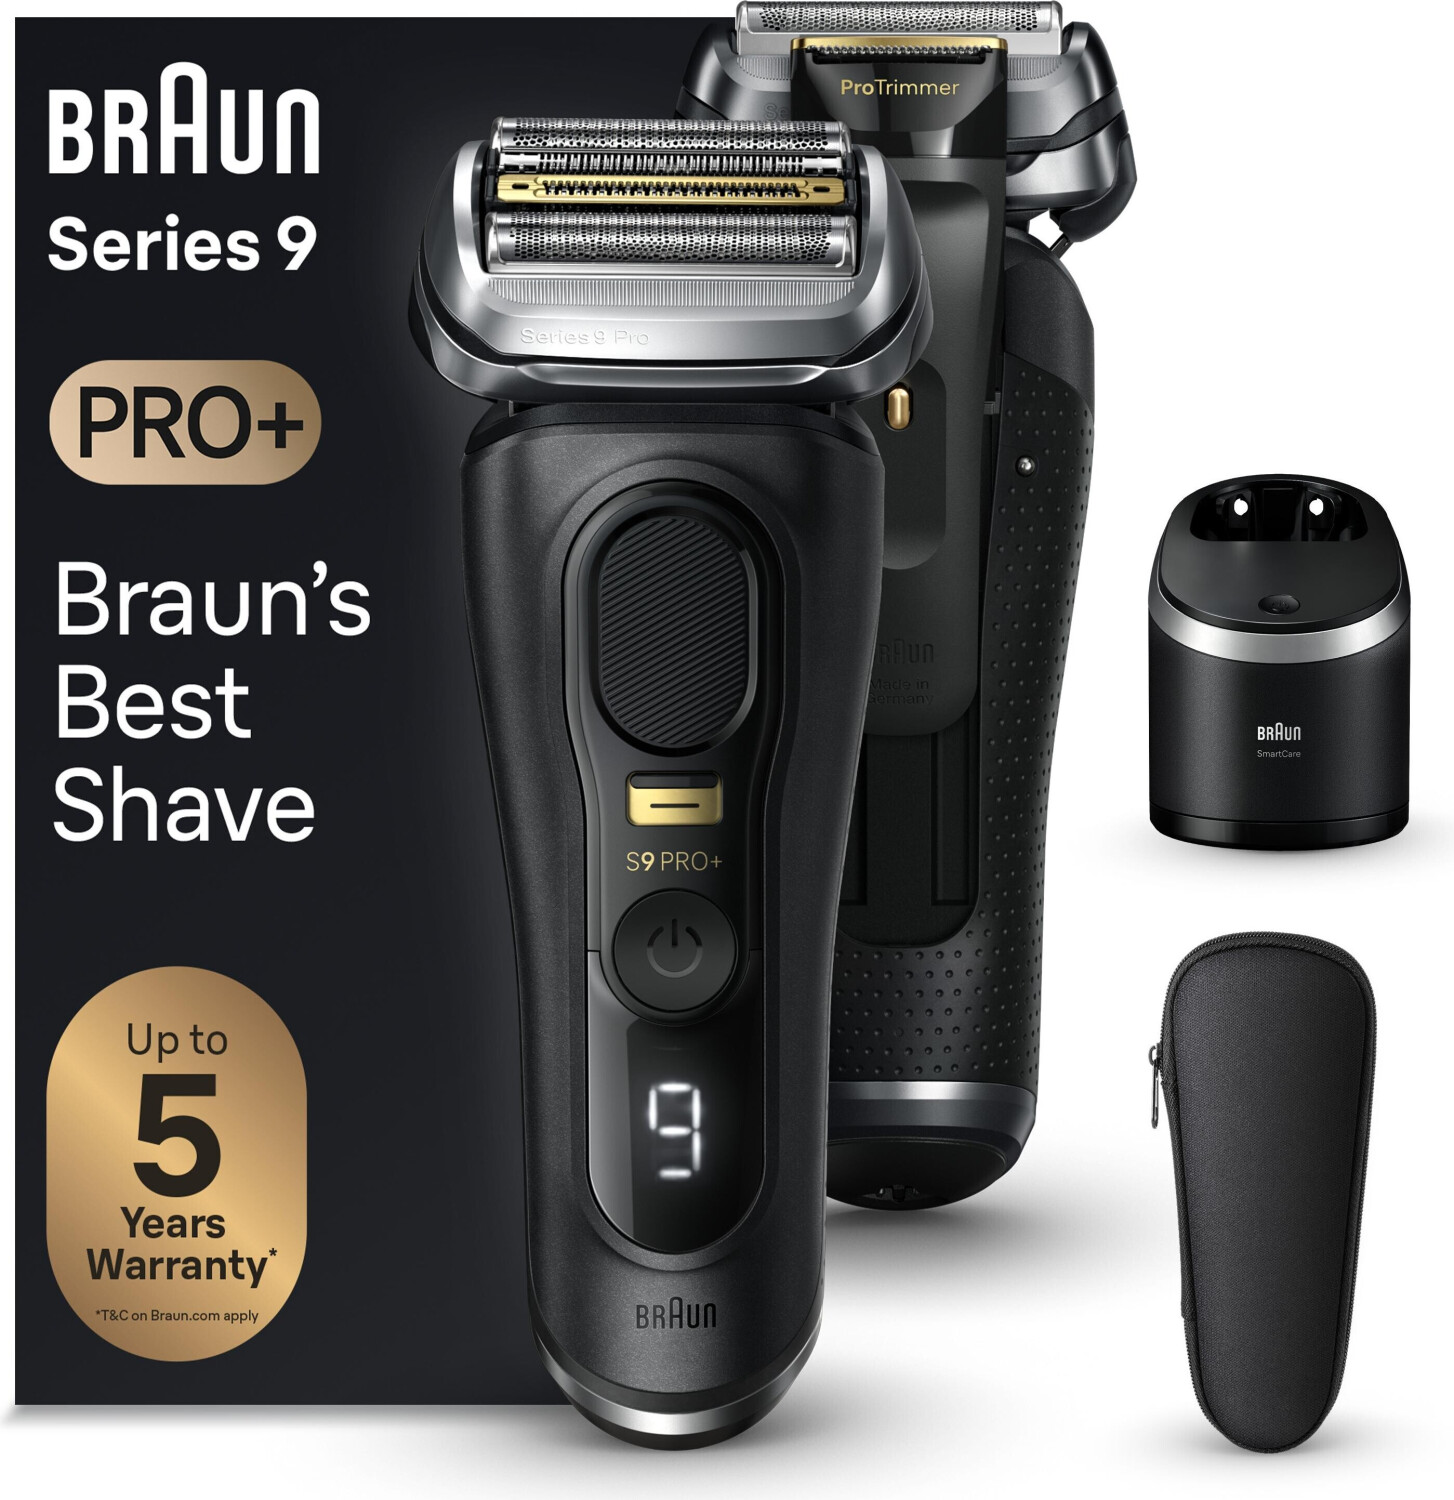  Braun Series 9 Pro plus 9560cc  Folienrasierer  Betriebszeit 60 Min.  Akku-Betrieb 